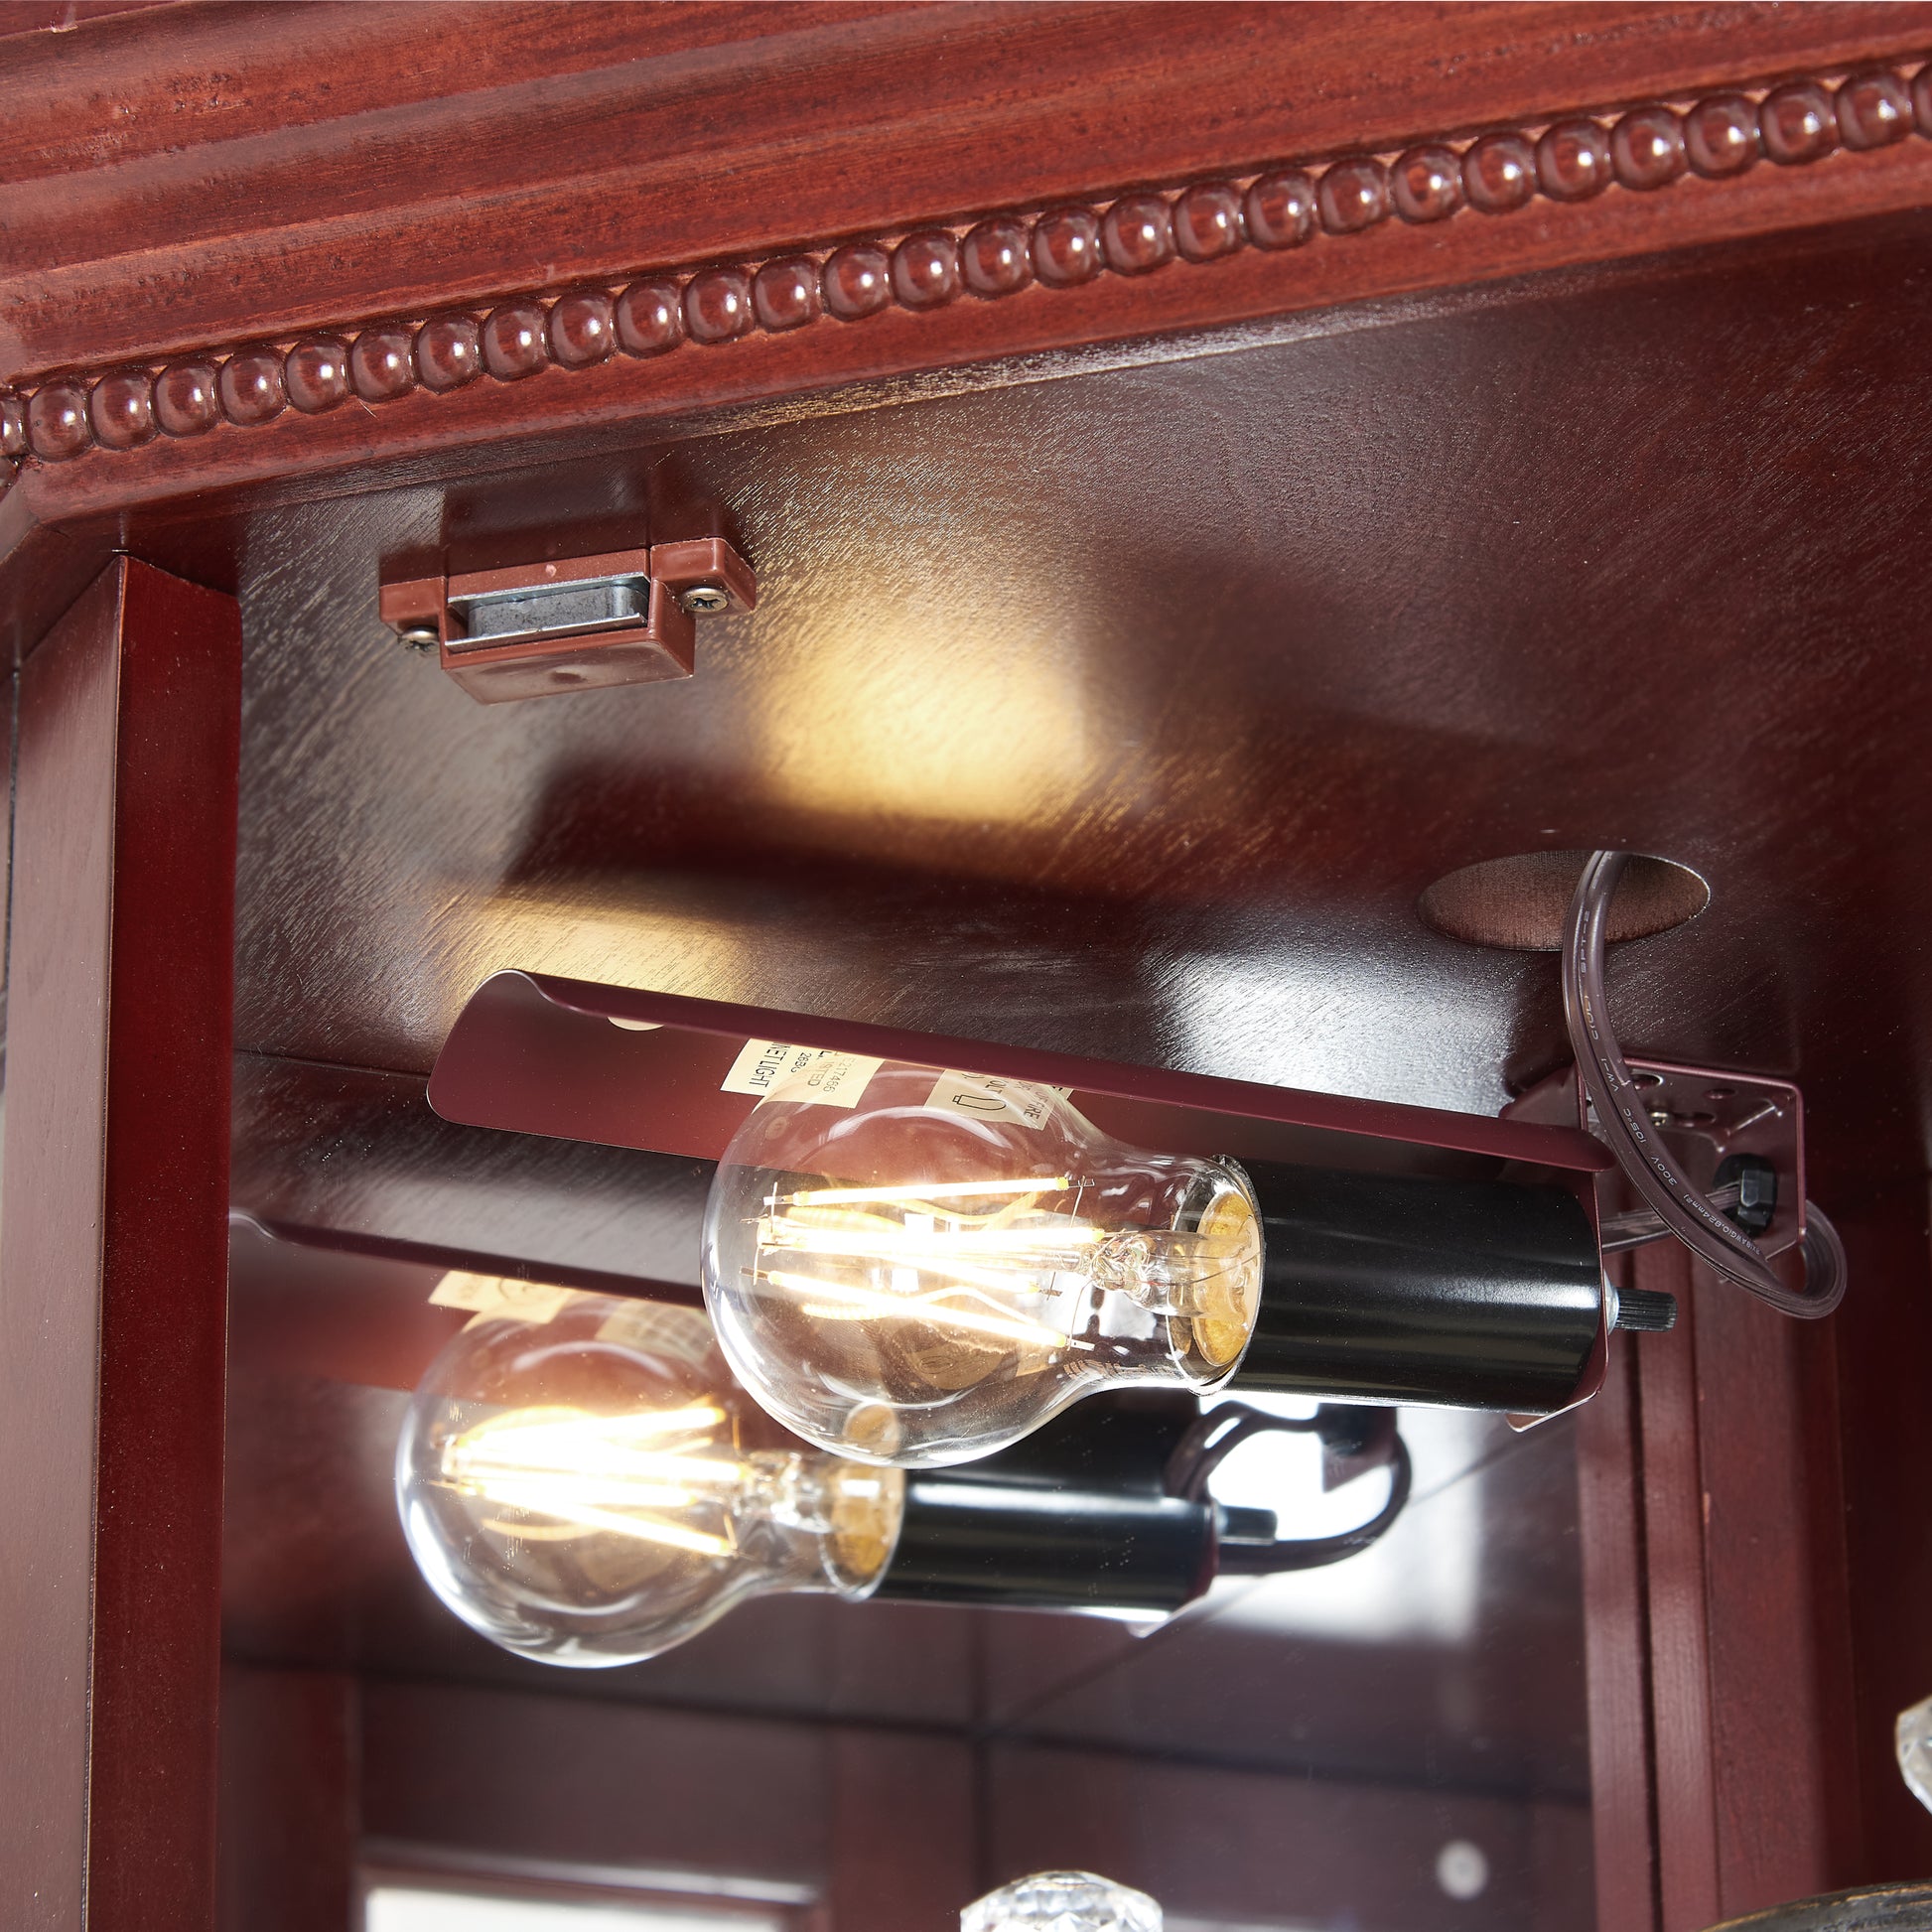 Corner Curio Cabinet With Lights, Adjustable